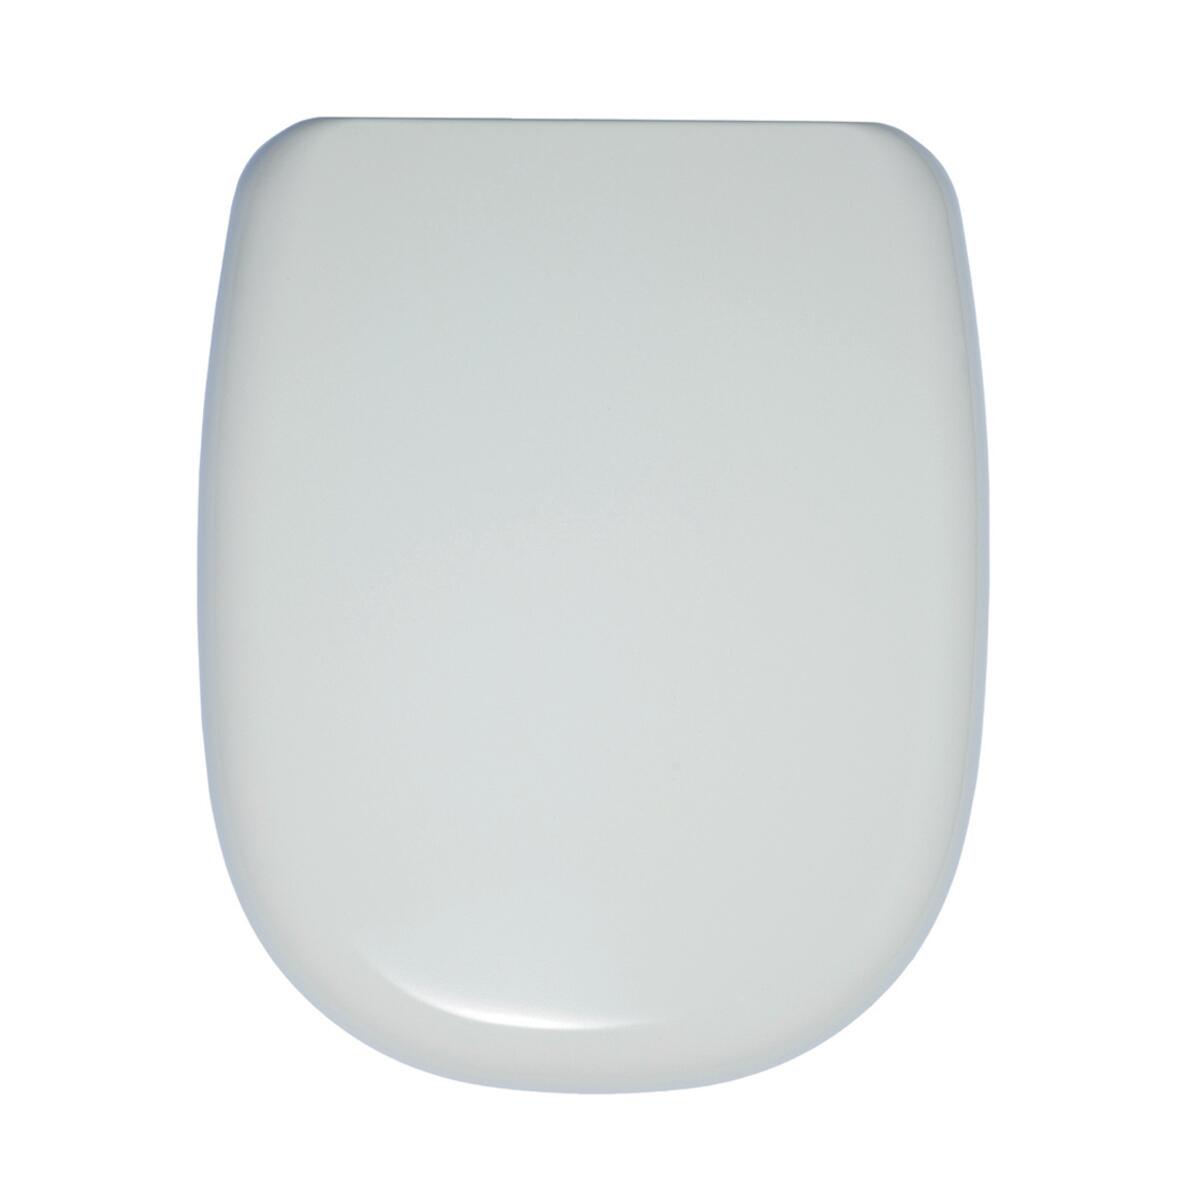 Bianco Bianco & Ideal Standard Conca Sedile Copriwater Dedicato Sì Ideal Standard Tesi Copriwater Dedicato 